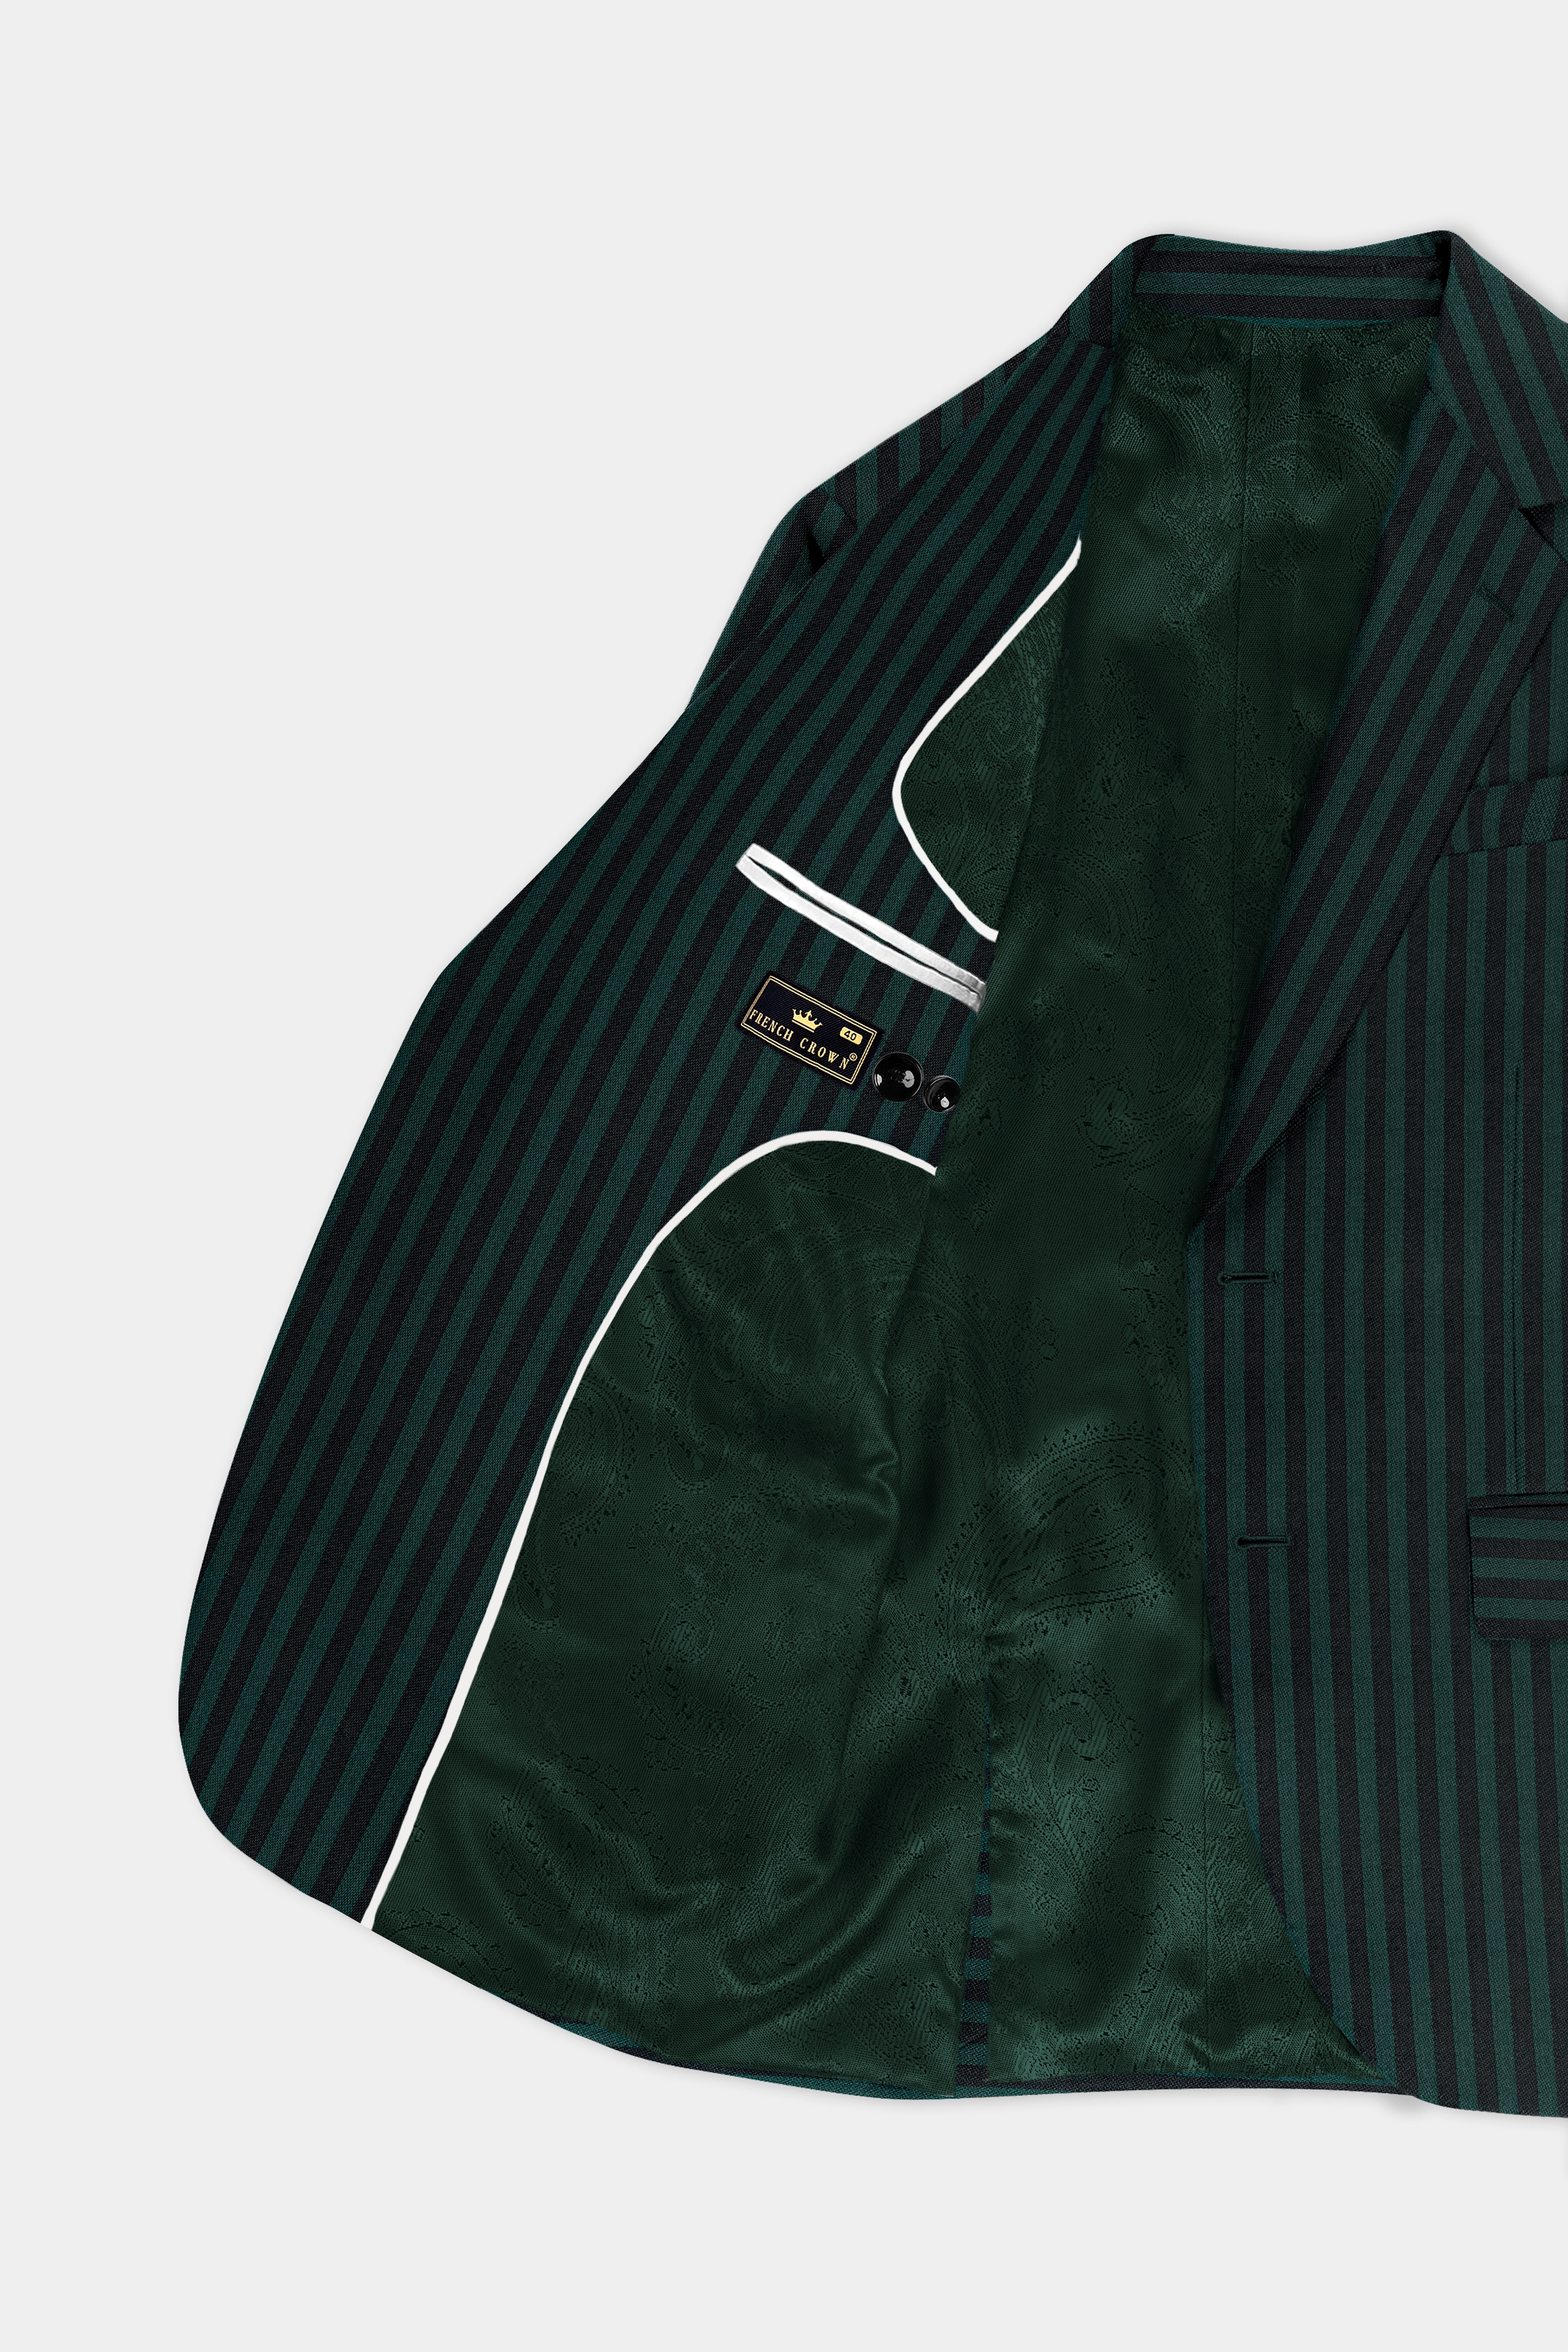 Celtic Green with Black Striped Wool Blend Blazer